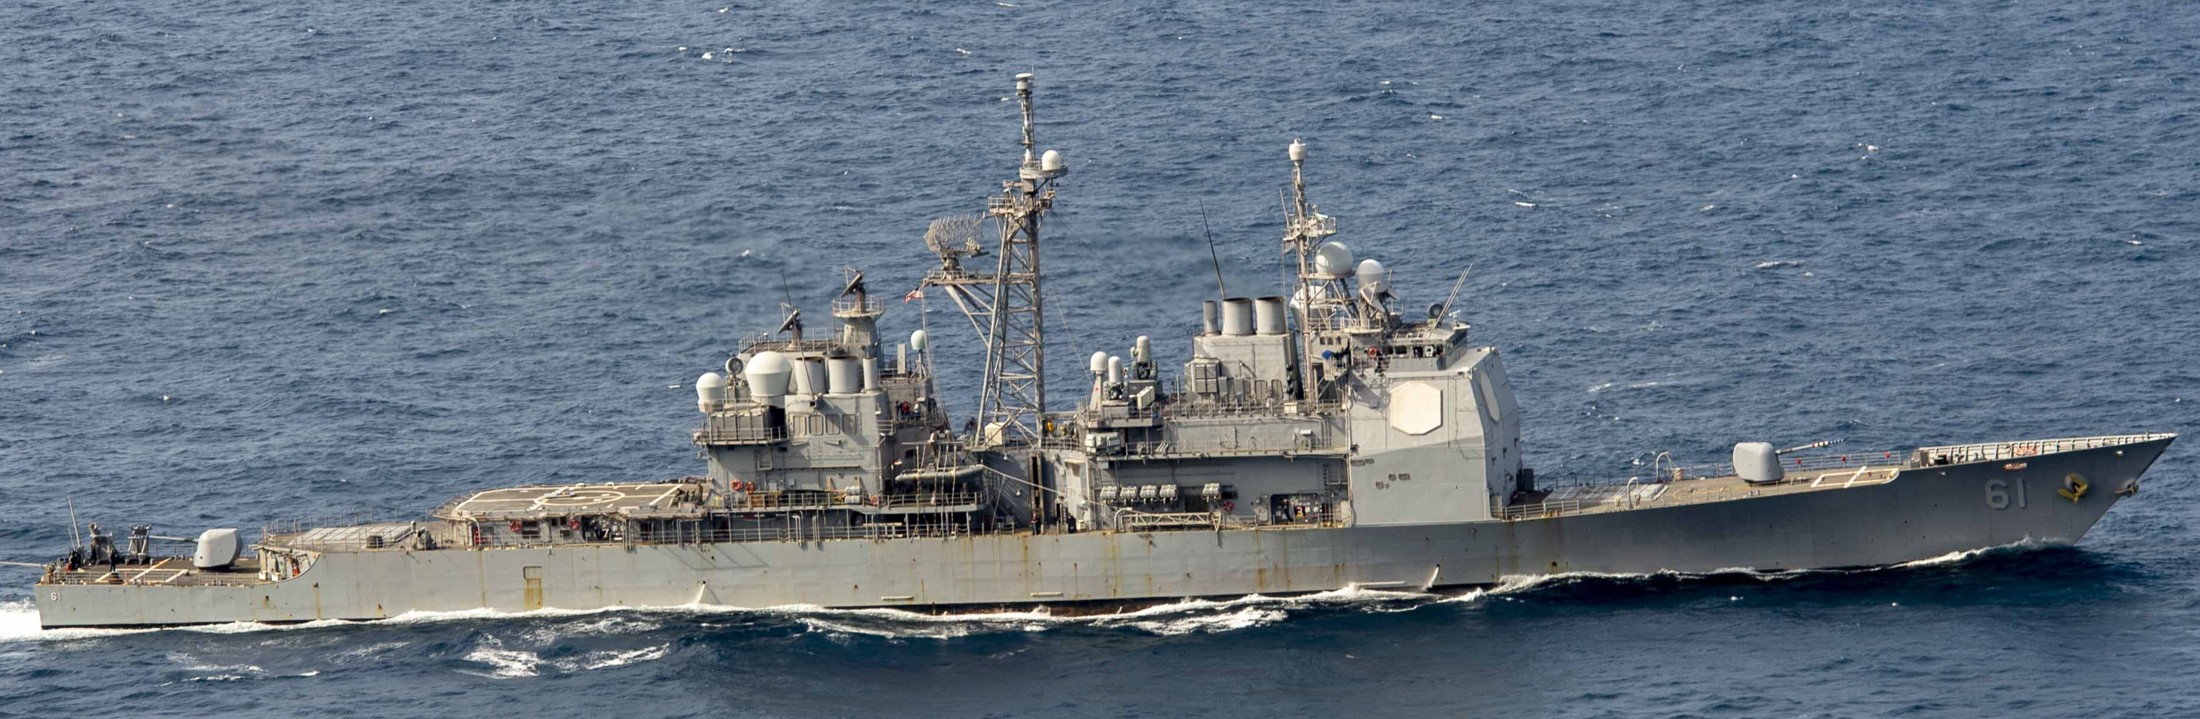 cg-61 uss monterey ticonderoga class guided missile cruiser aegis us navy atlantic ocean 106